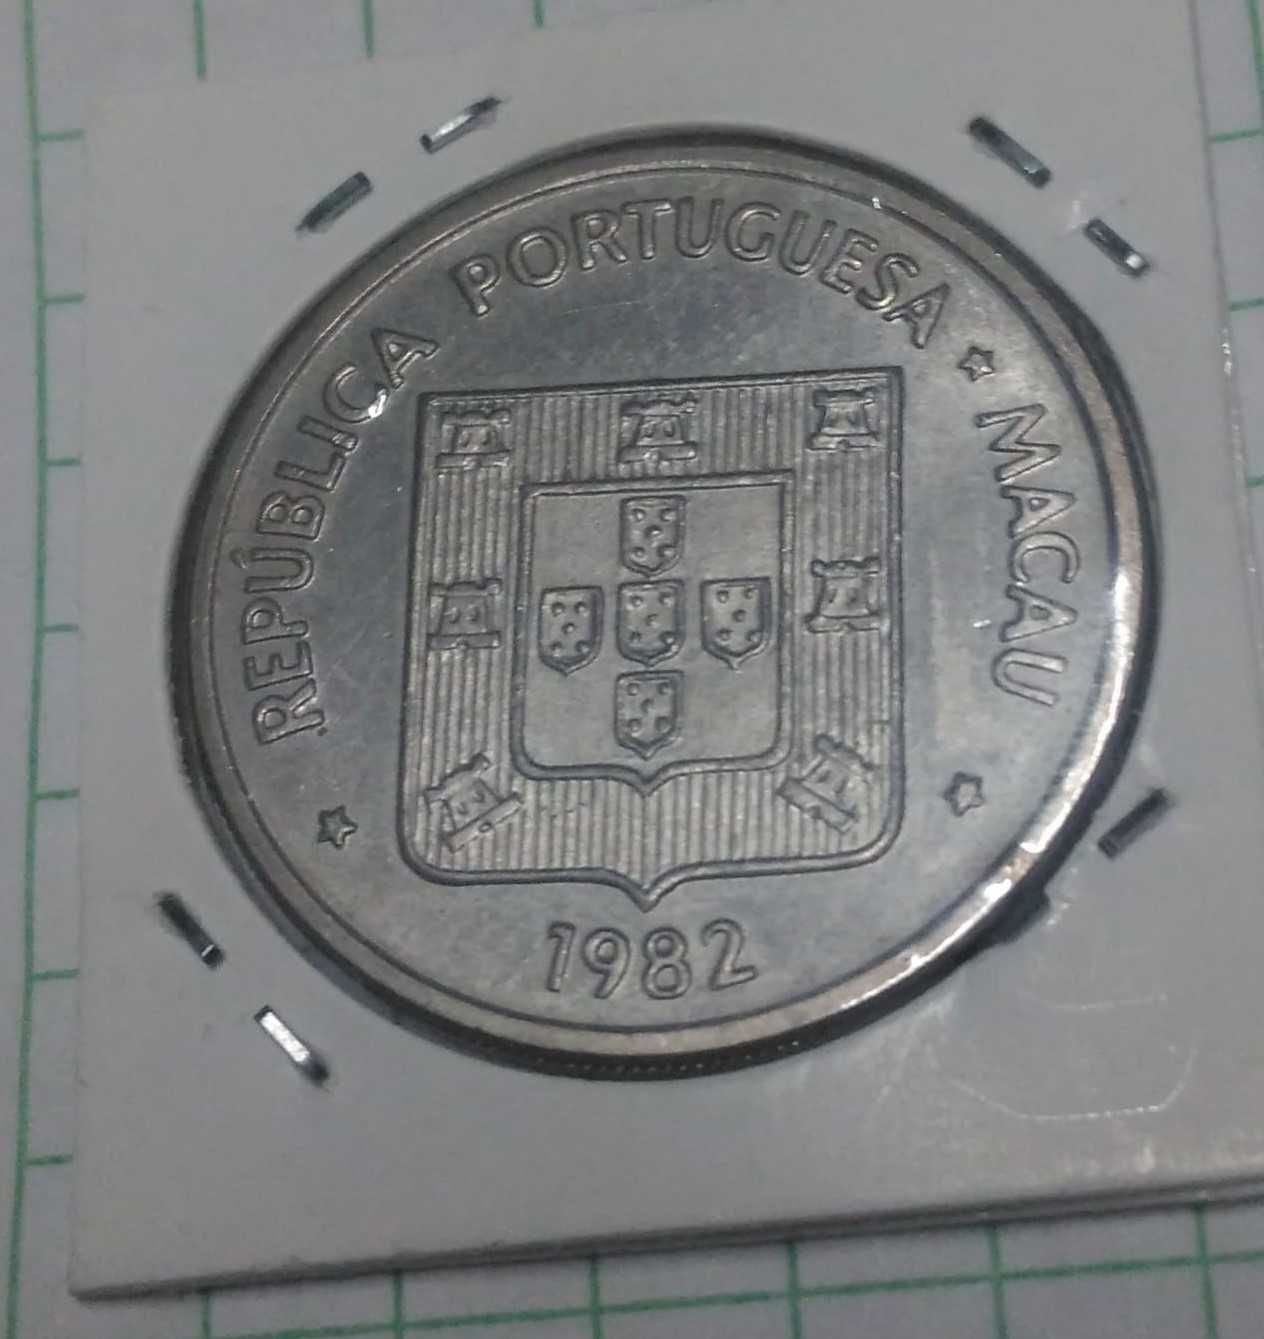 Moeda 1 tanga 1947 escudo  Índia Macau 10 avos 1993  pataca Timor